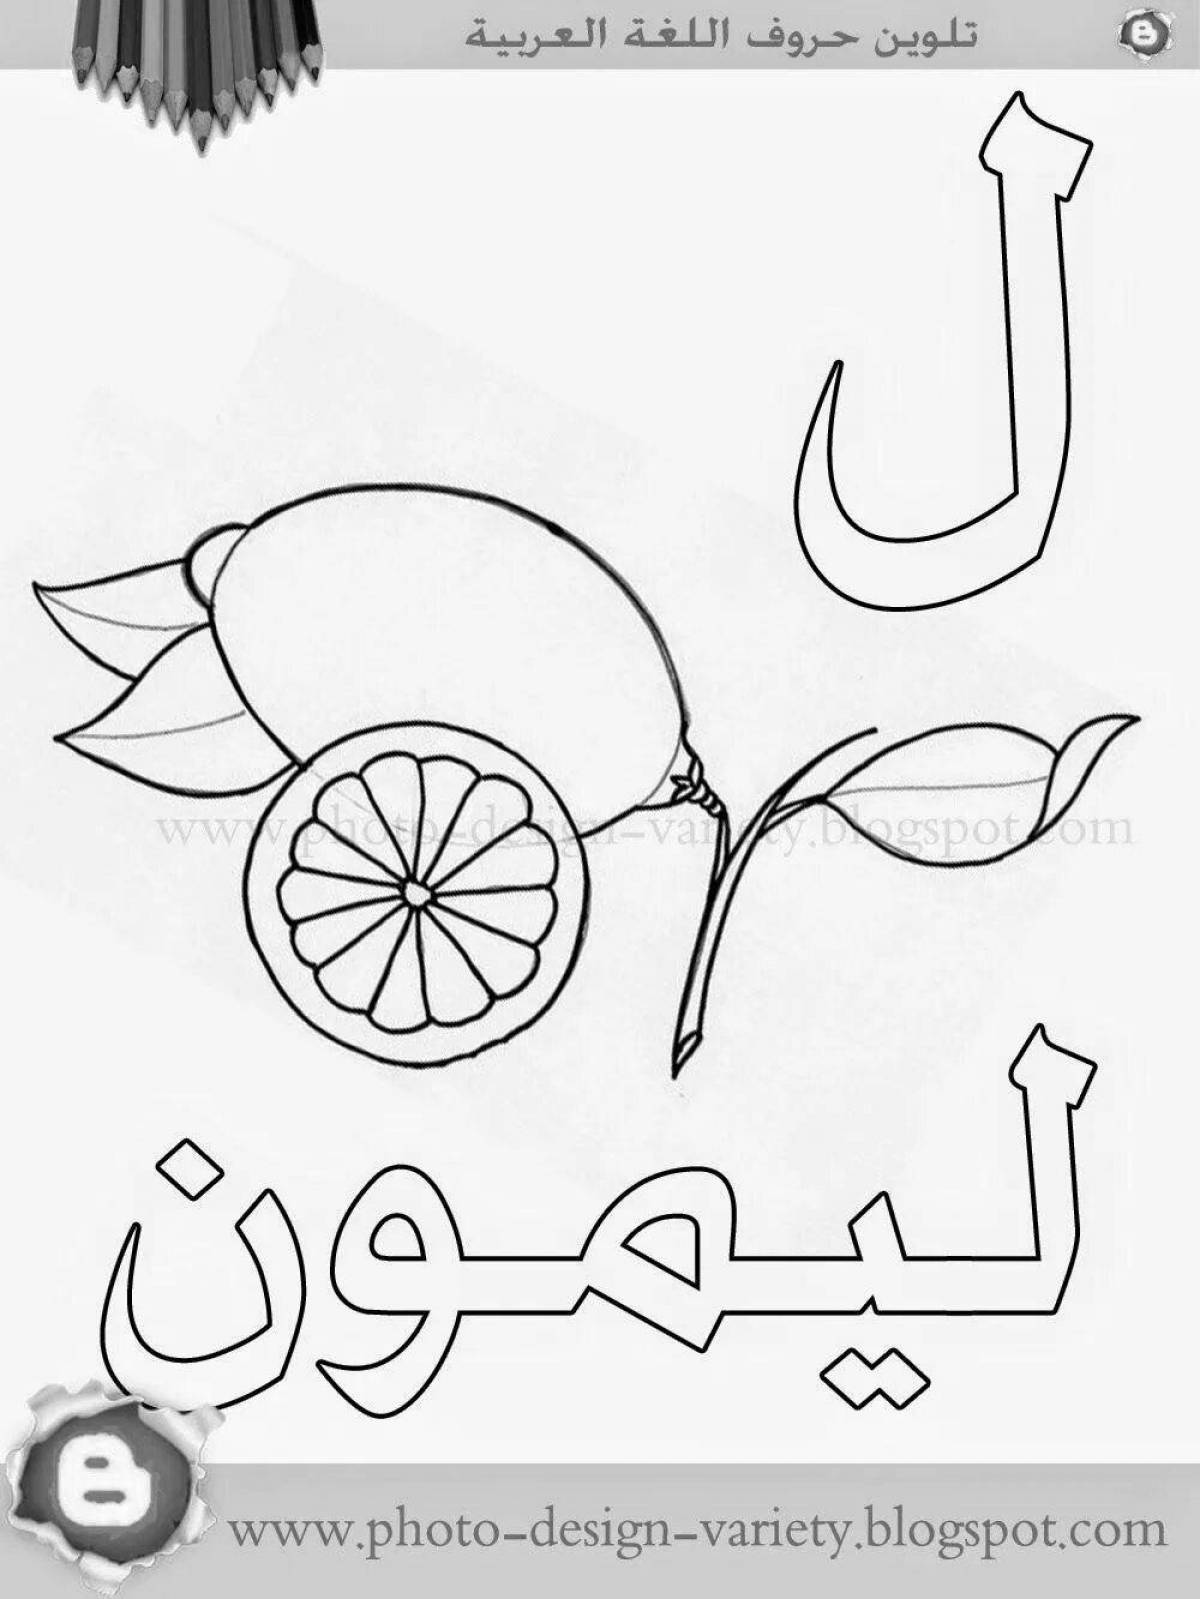 Children's Arabic alphabet coloring book for kids